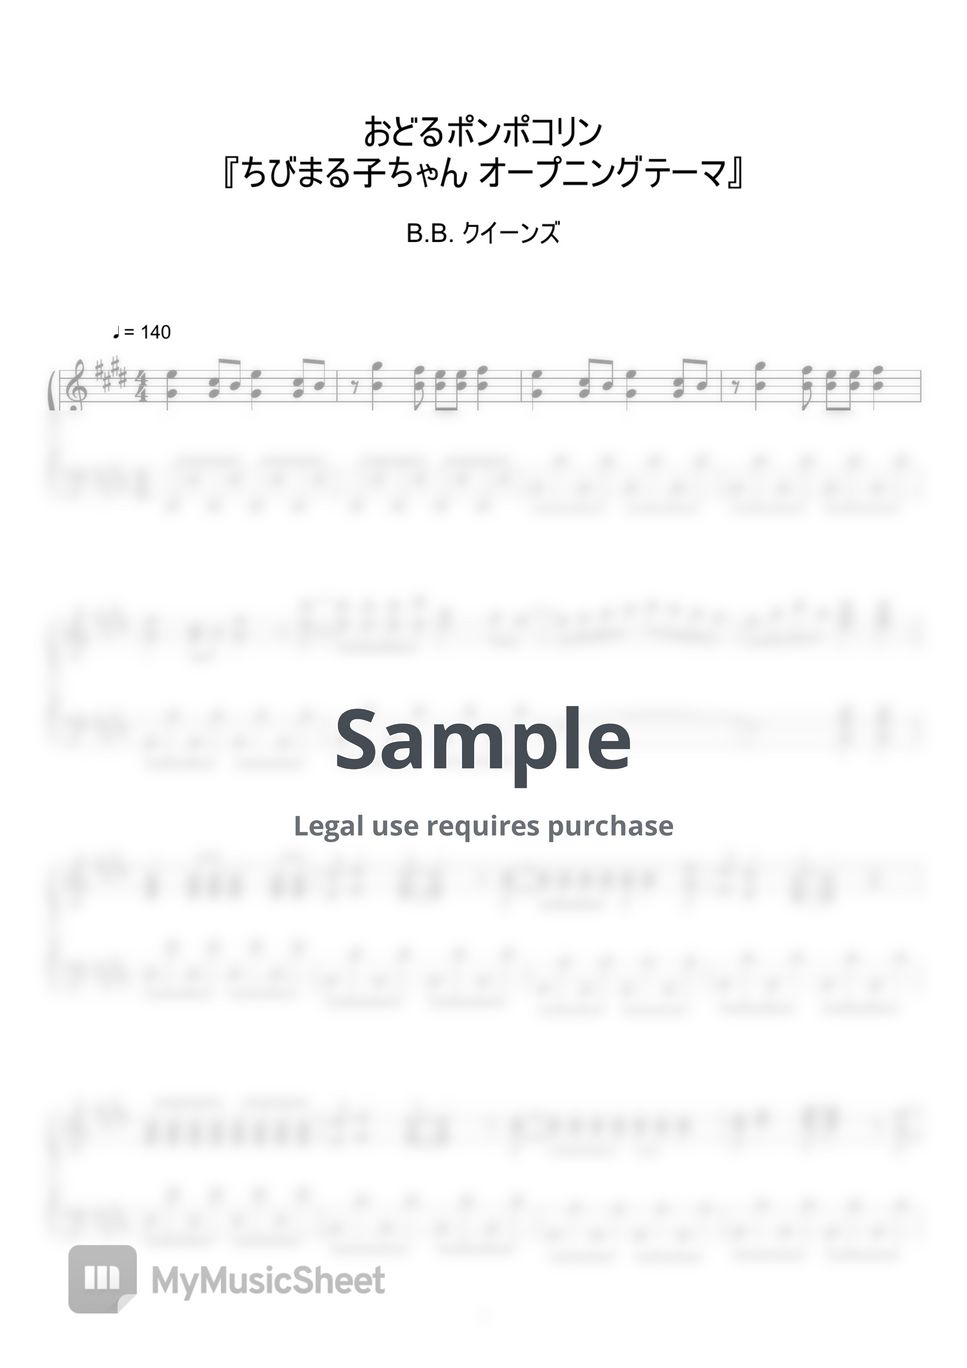 B.B.Queens - おどるポンポコリン (Odoru Pompokolin) (Sheet Music, MIDI,) by sayu